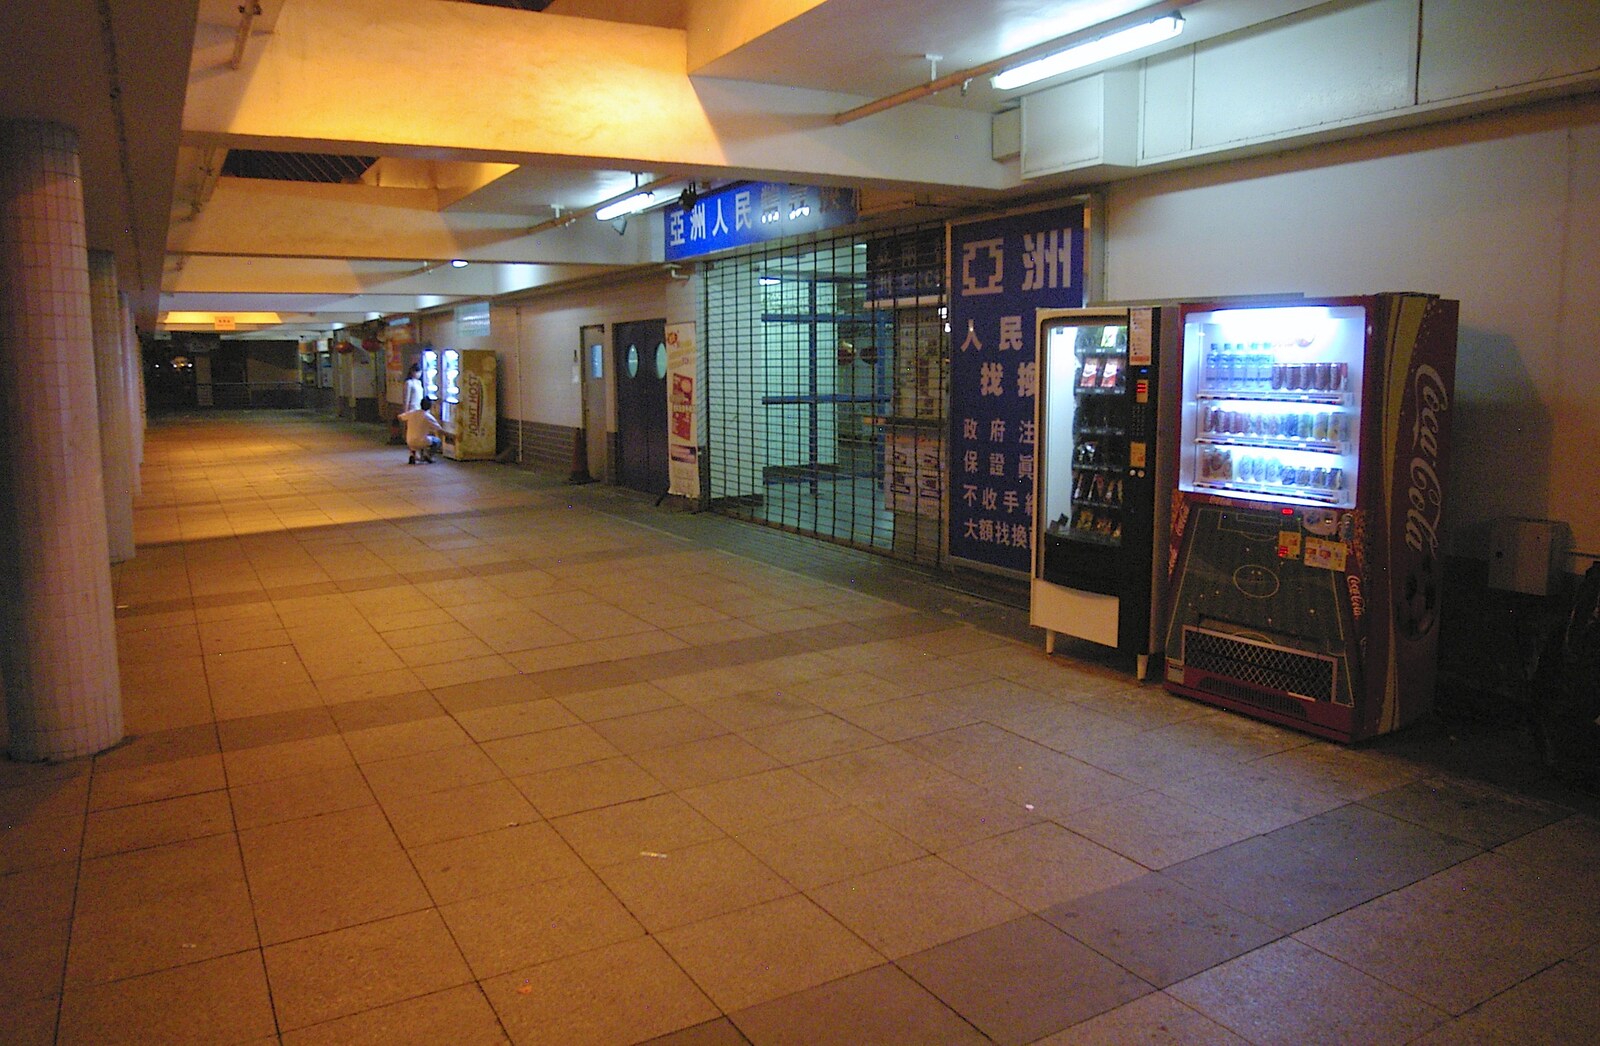 Desolate retail premises from Wan Chai and Central, Hong Kong, China - 2nd October 2006